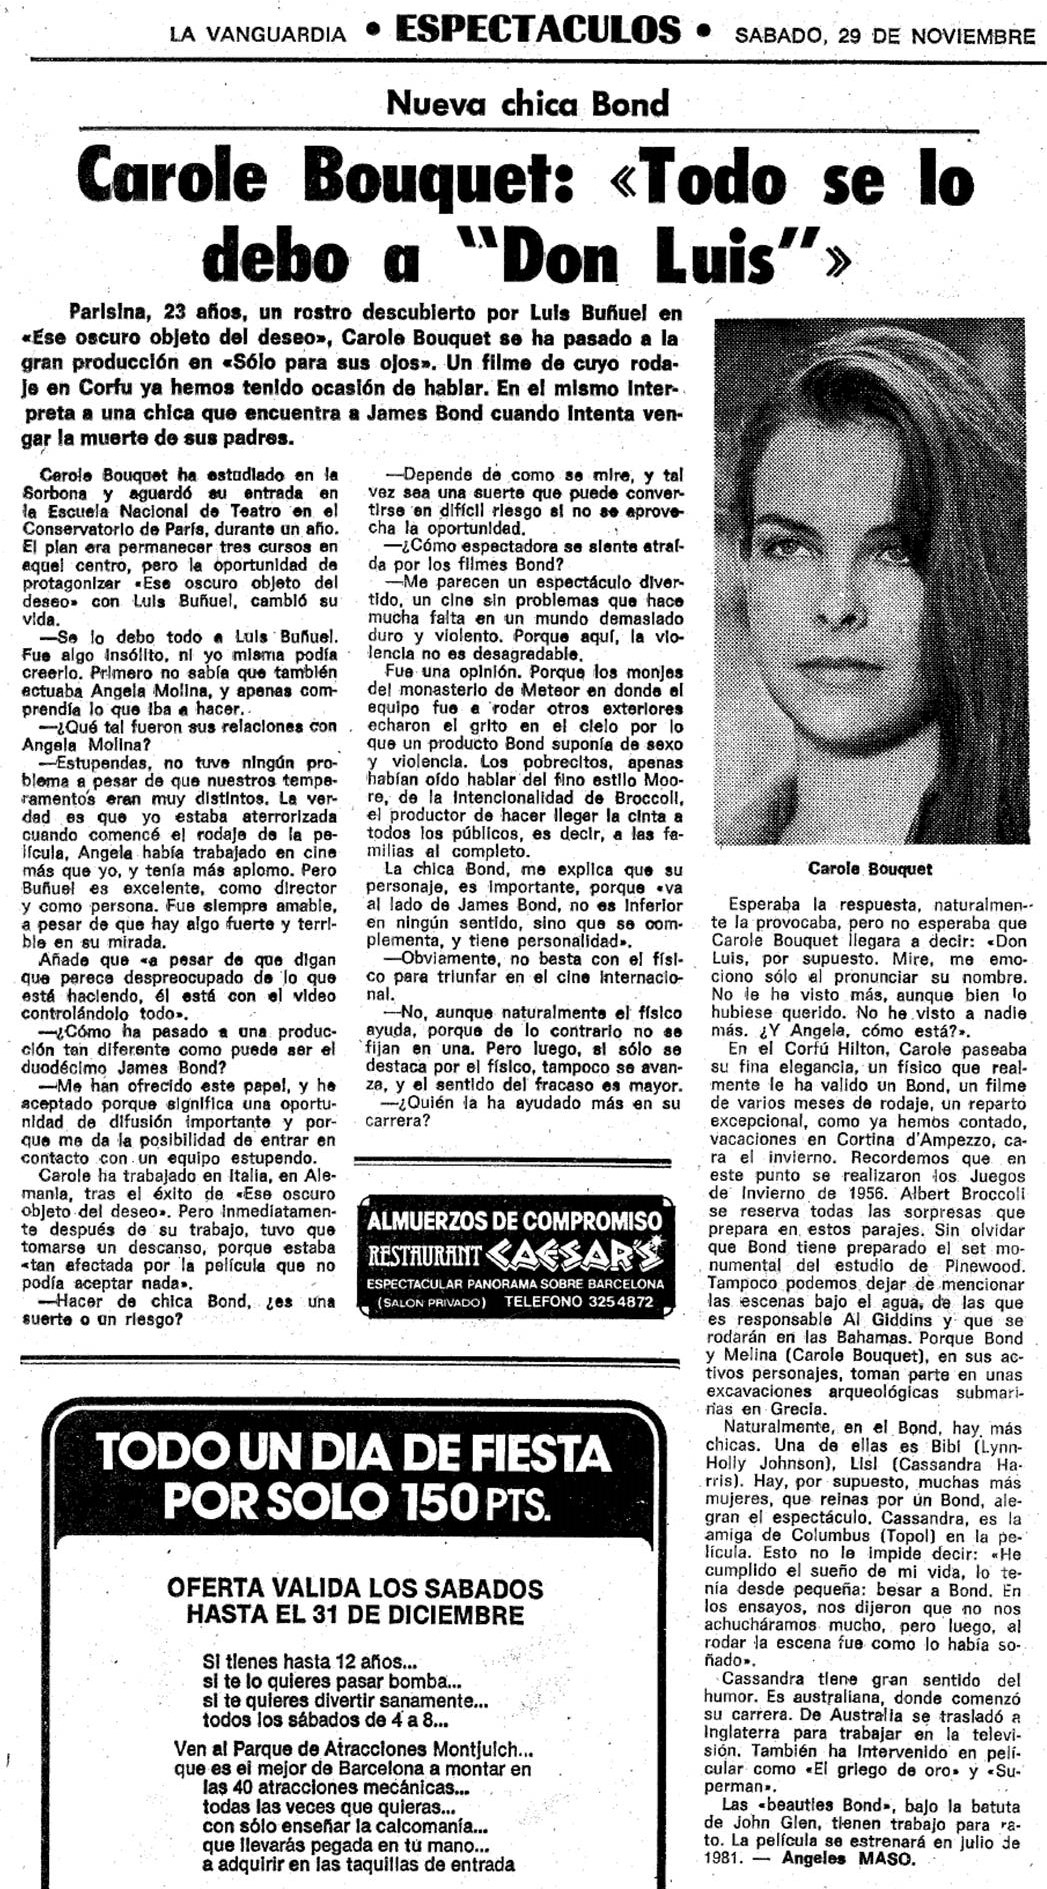 12 1980 11 29 La Vanguardia Barcelona Carole Bouquet